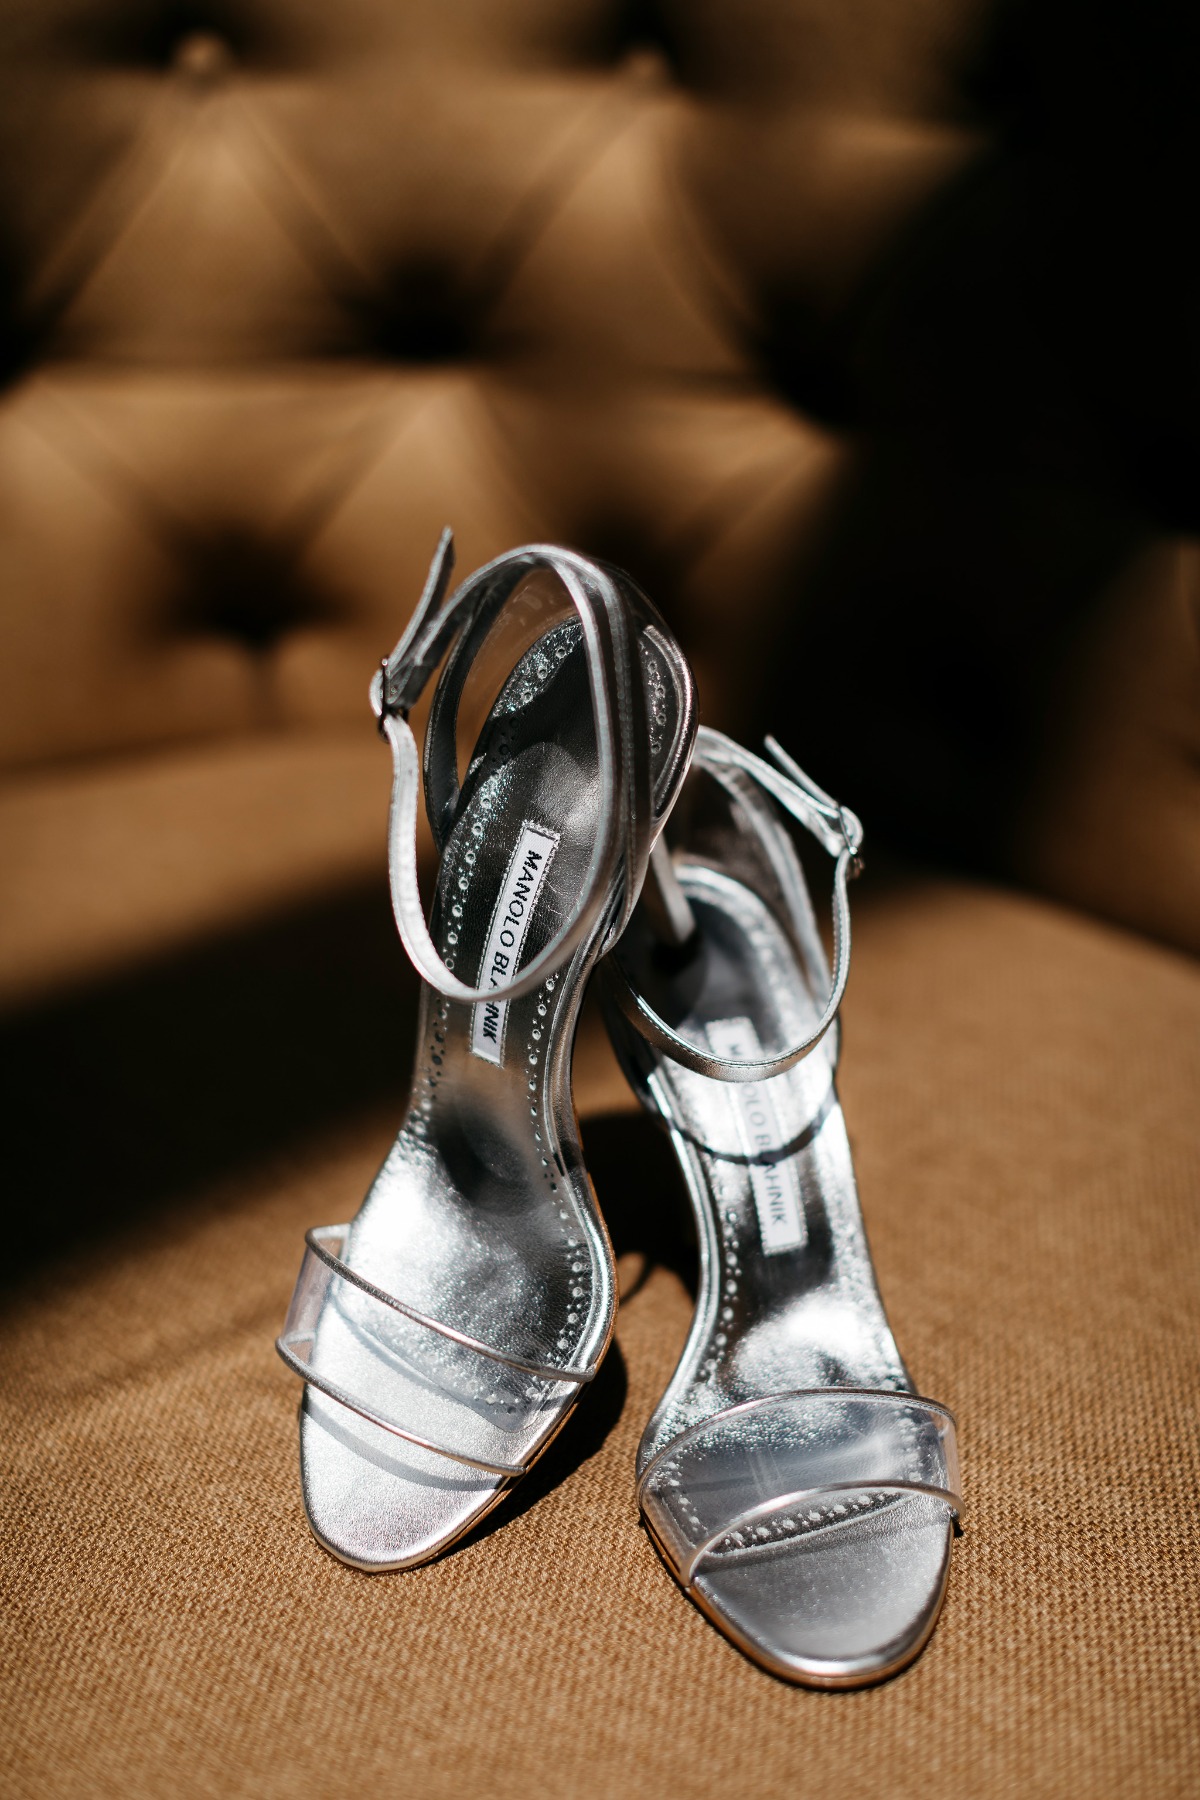 Manolo Blahnik heels for the bride